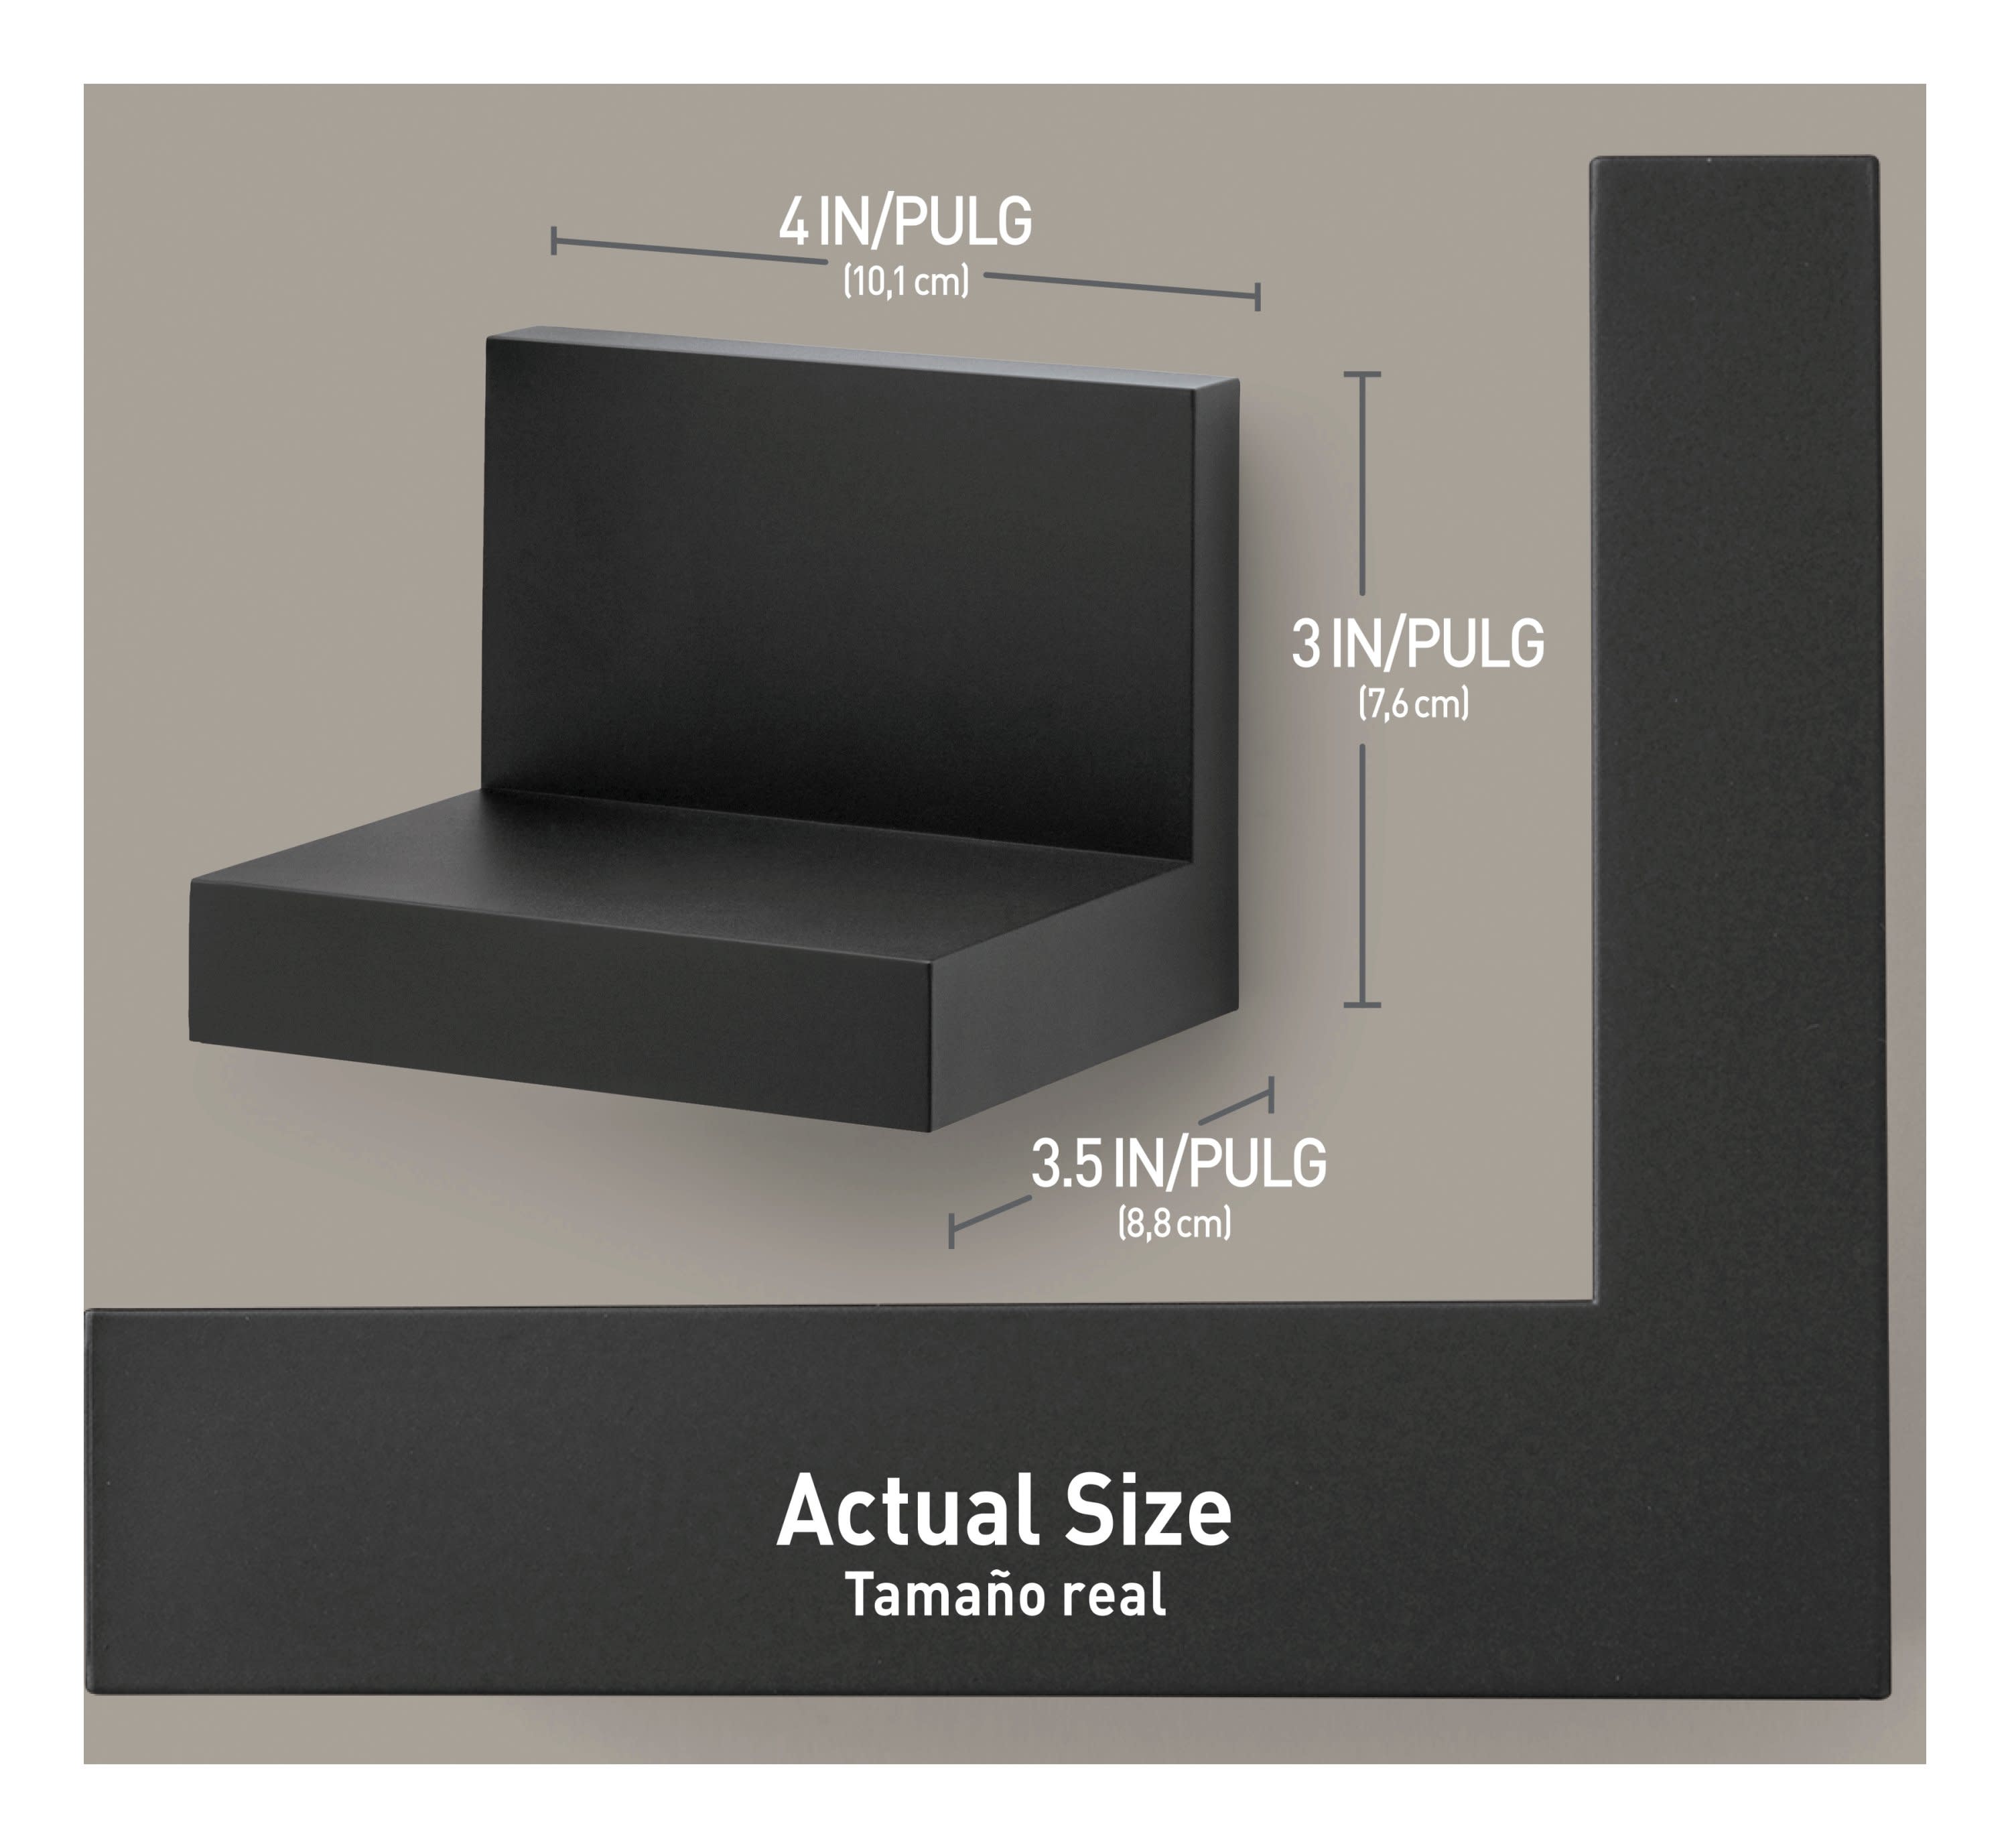 Command Slate Floating Shelf 4-in L x 3.5-in D (2 Decorative Shelves)